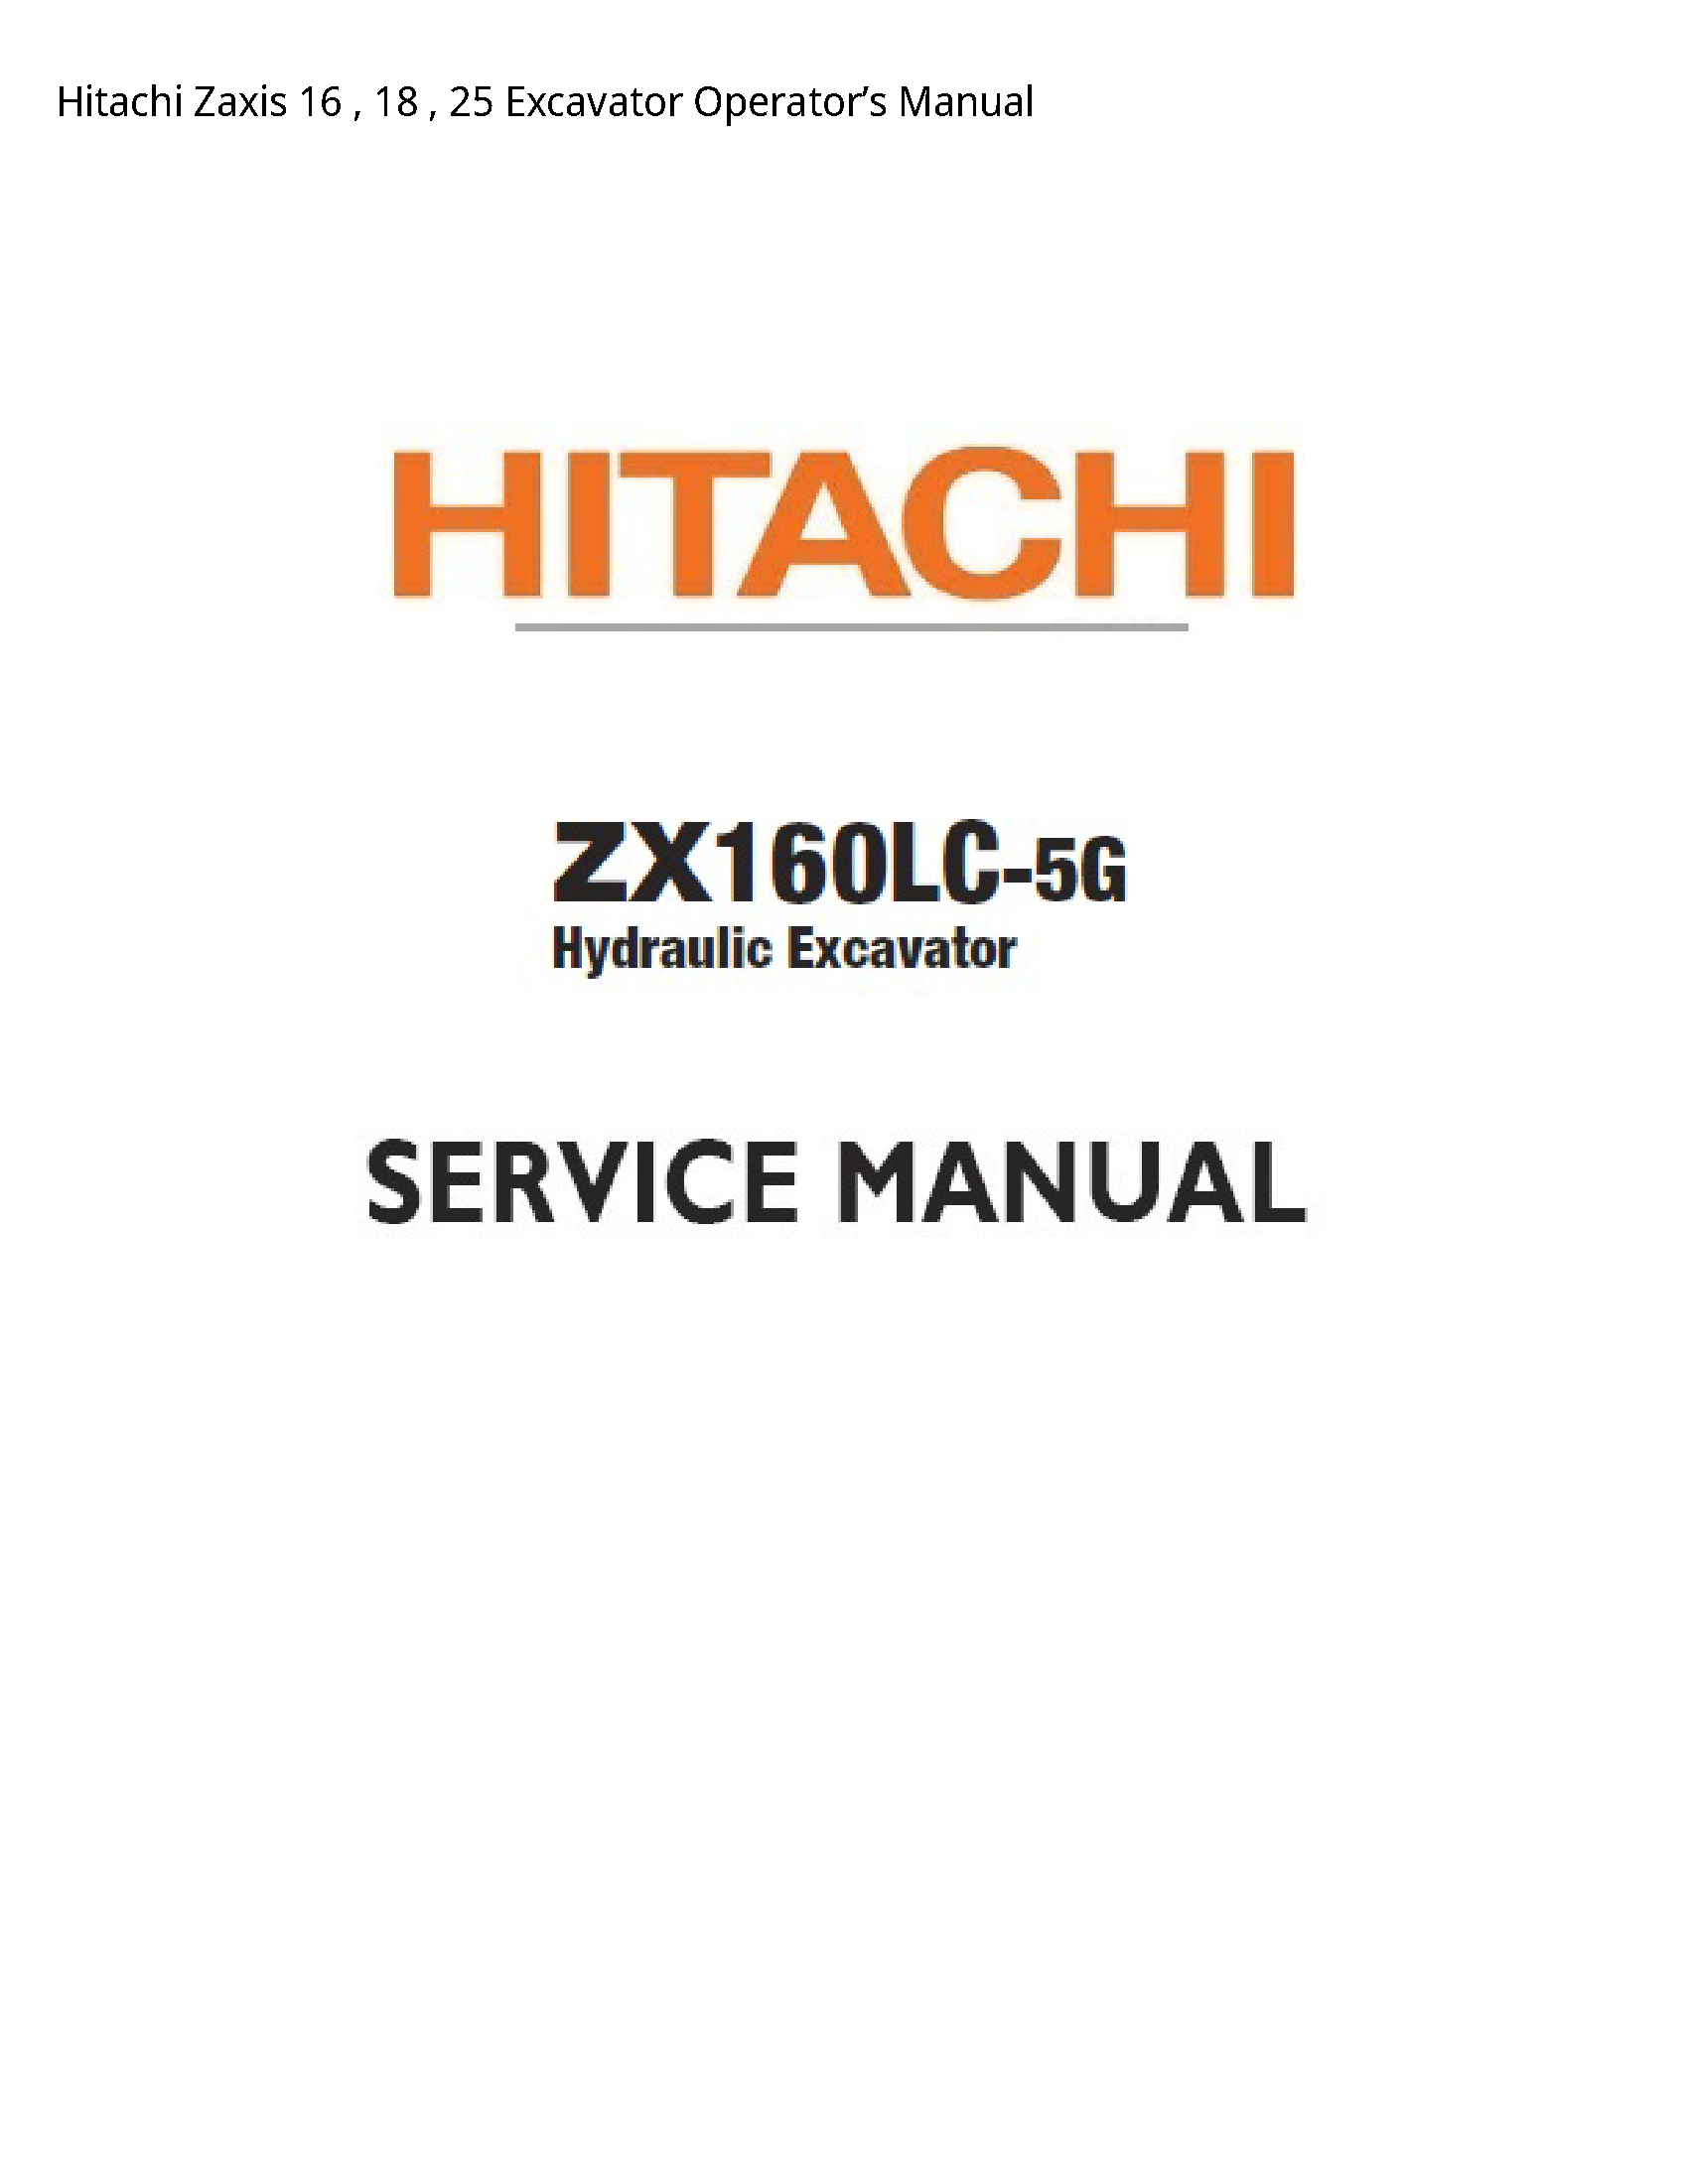 Hitachi 16 Zaxis Excavator Operator’s manual